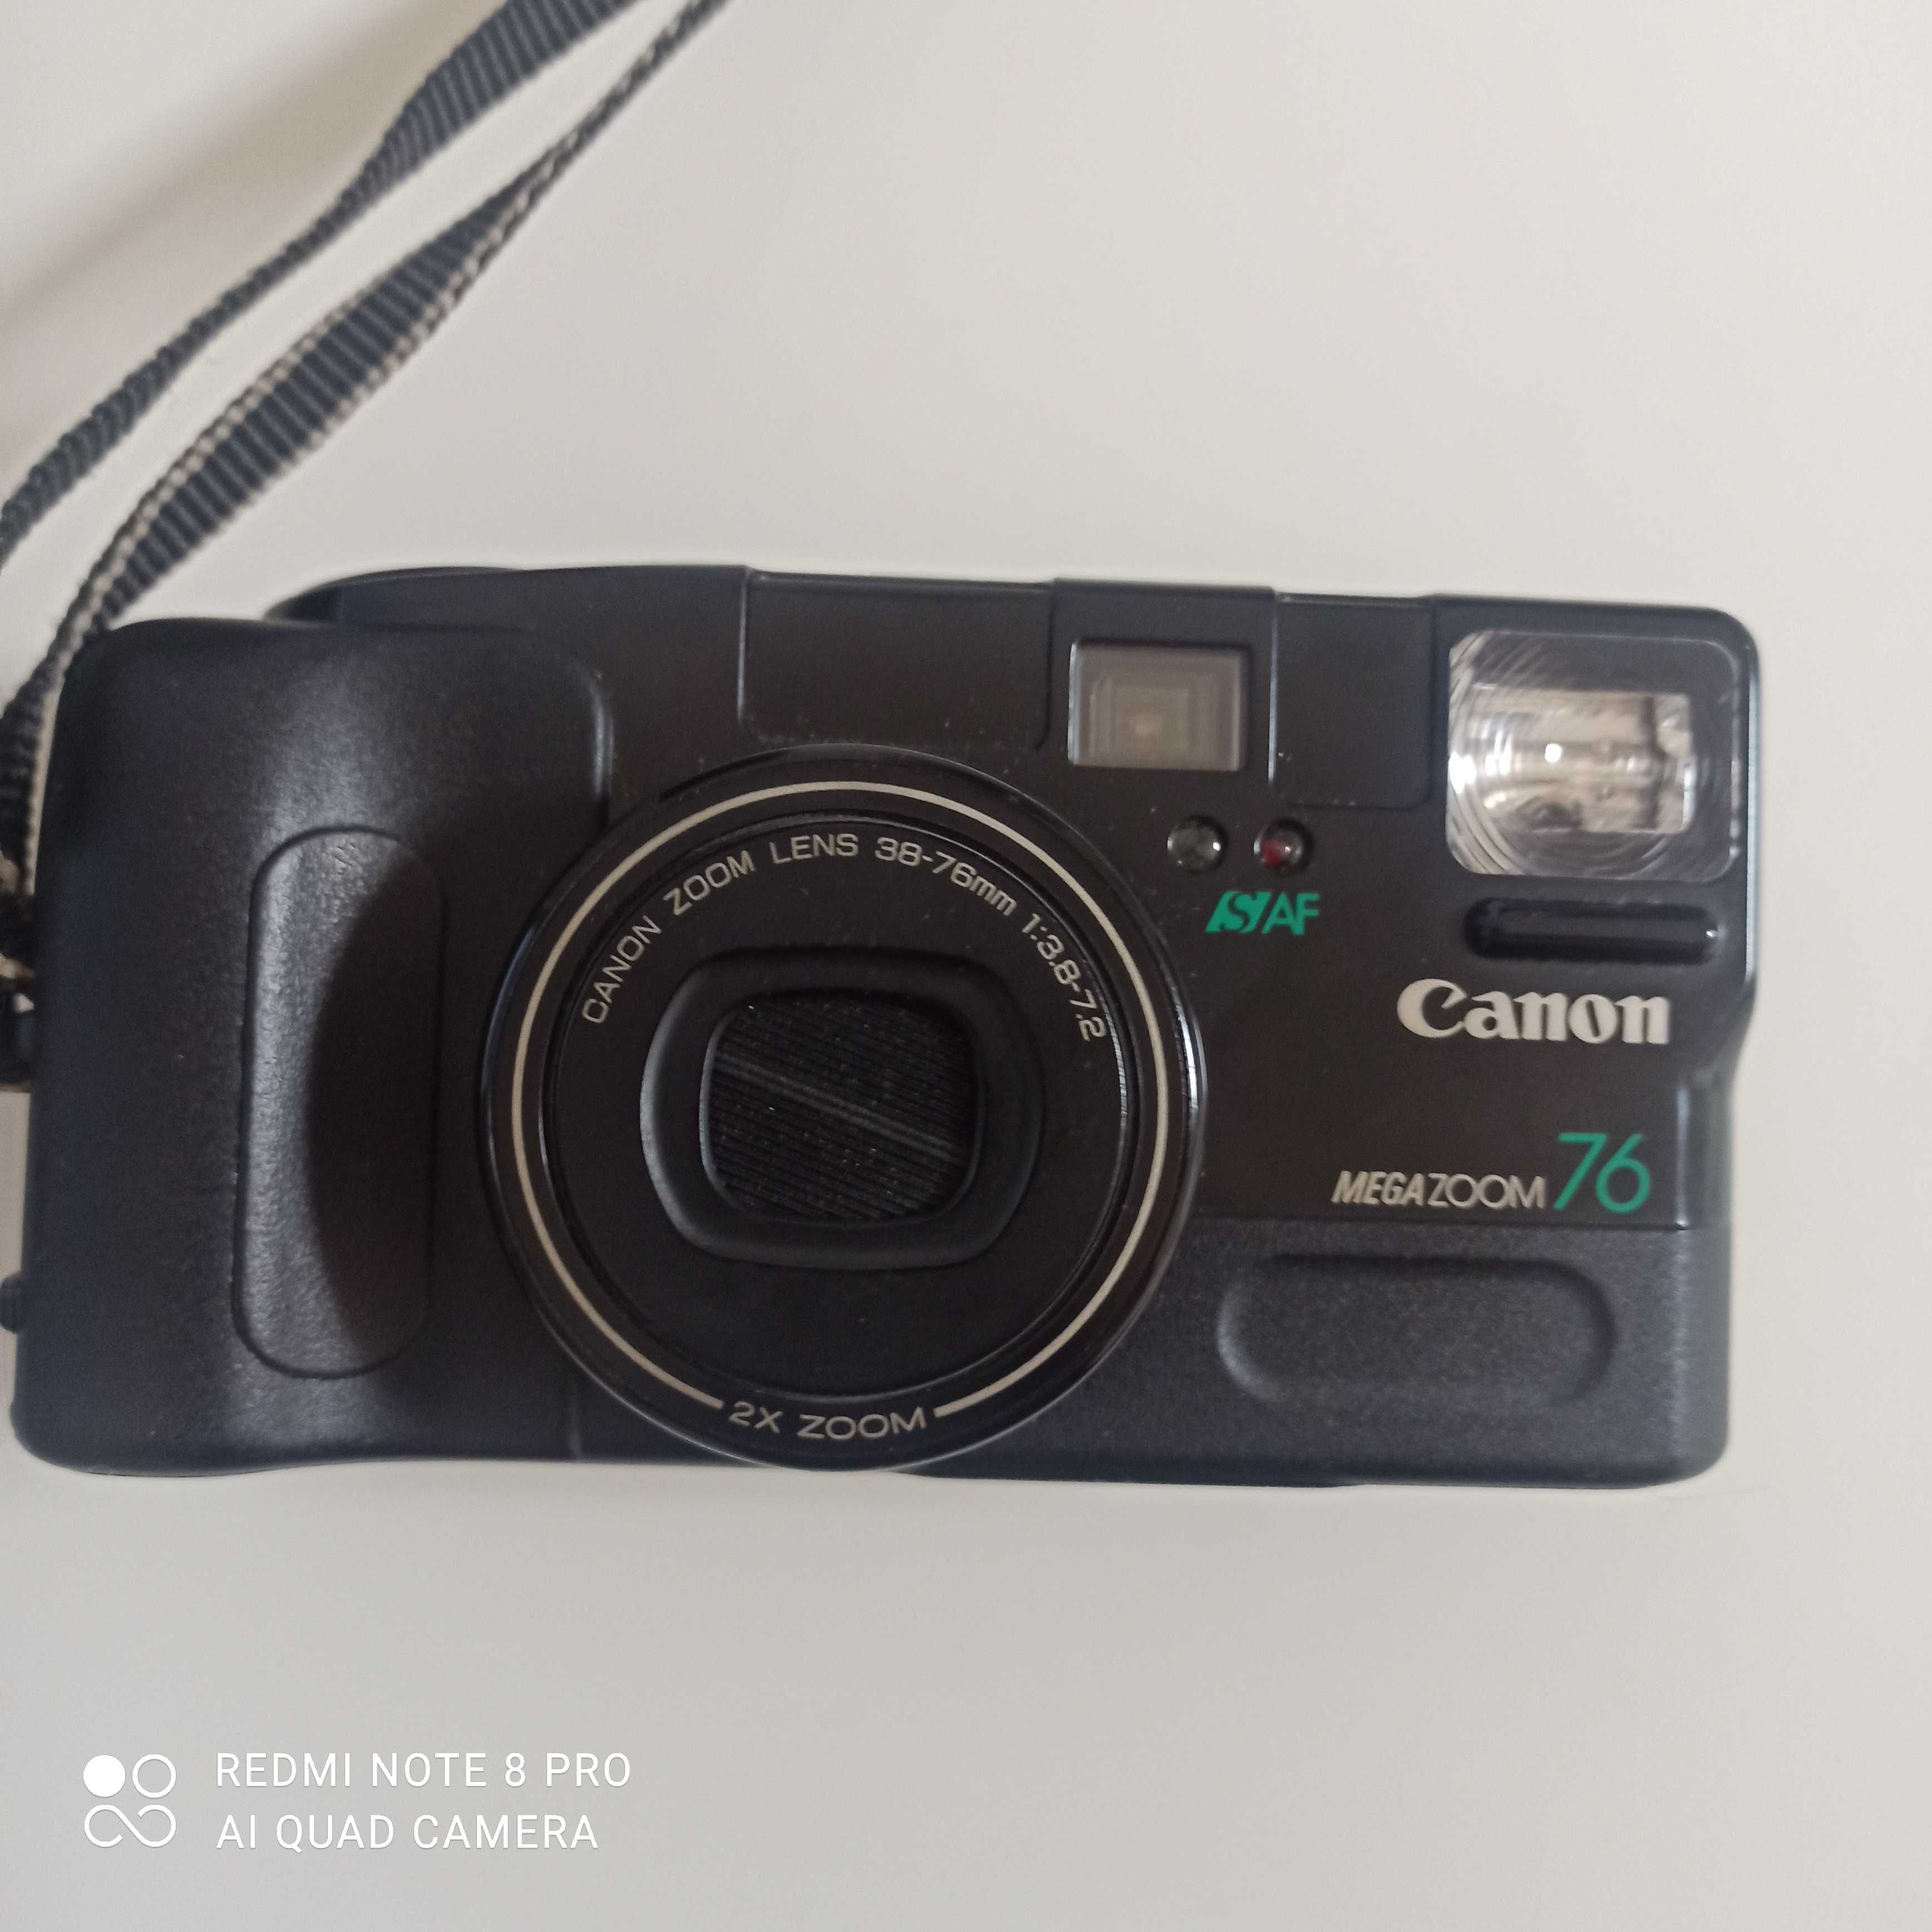 Aparat fotograficzny Canon Mega Zoom 76